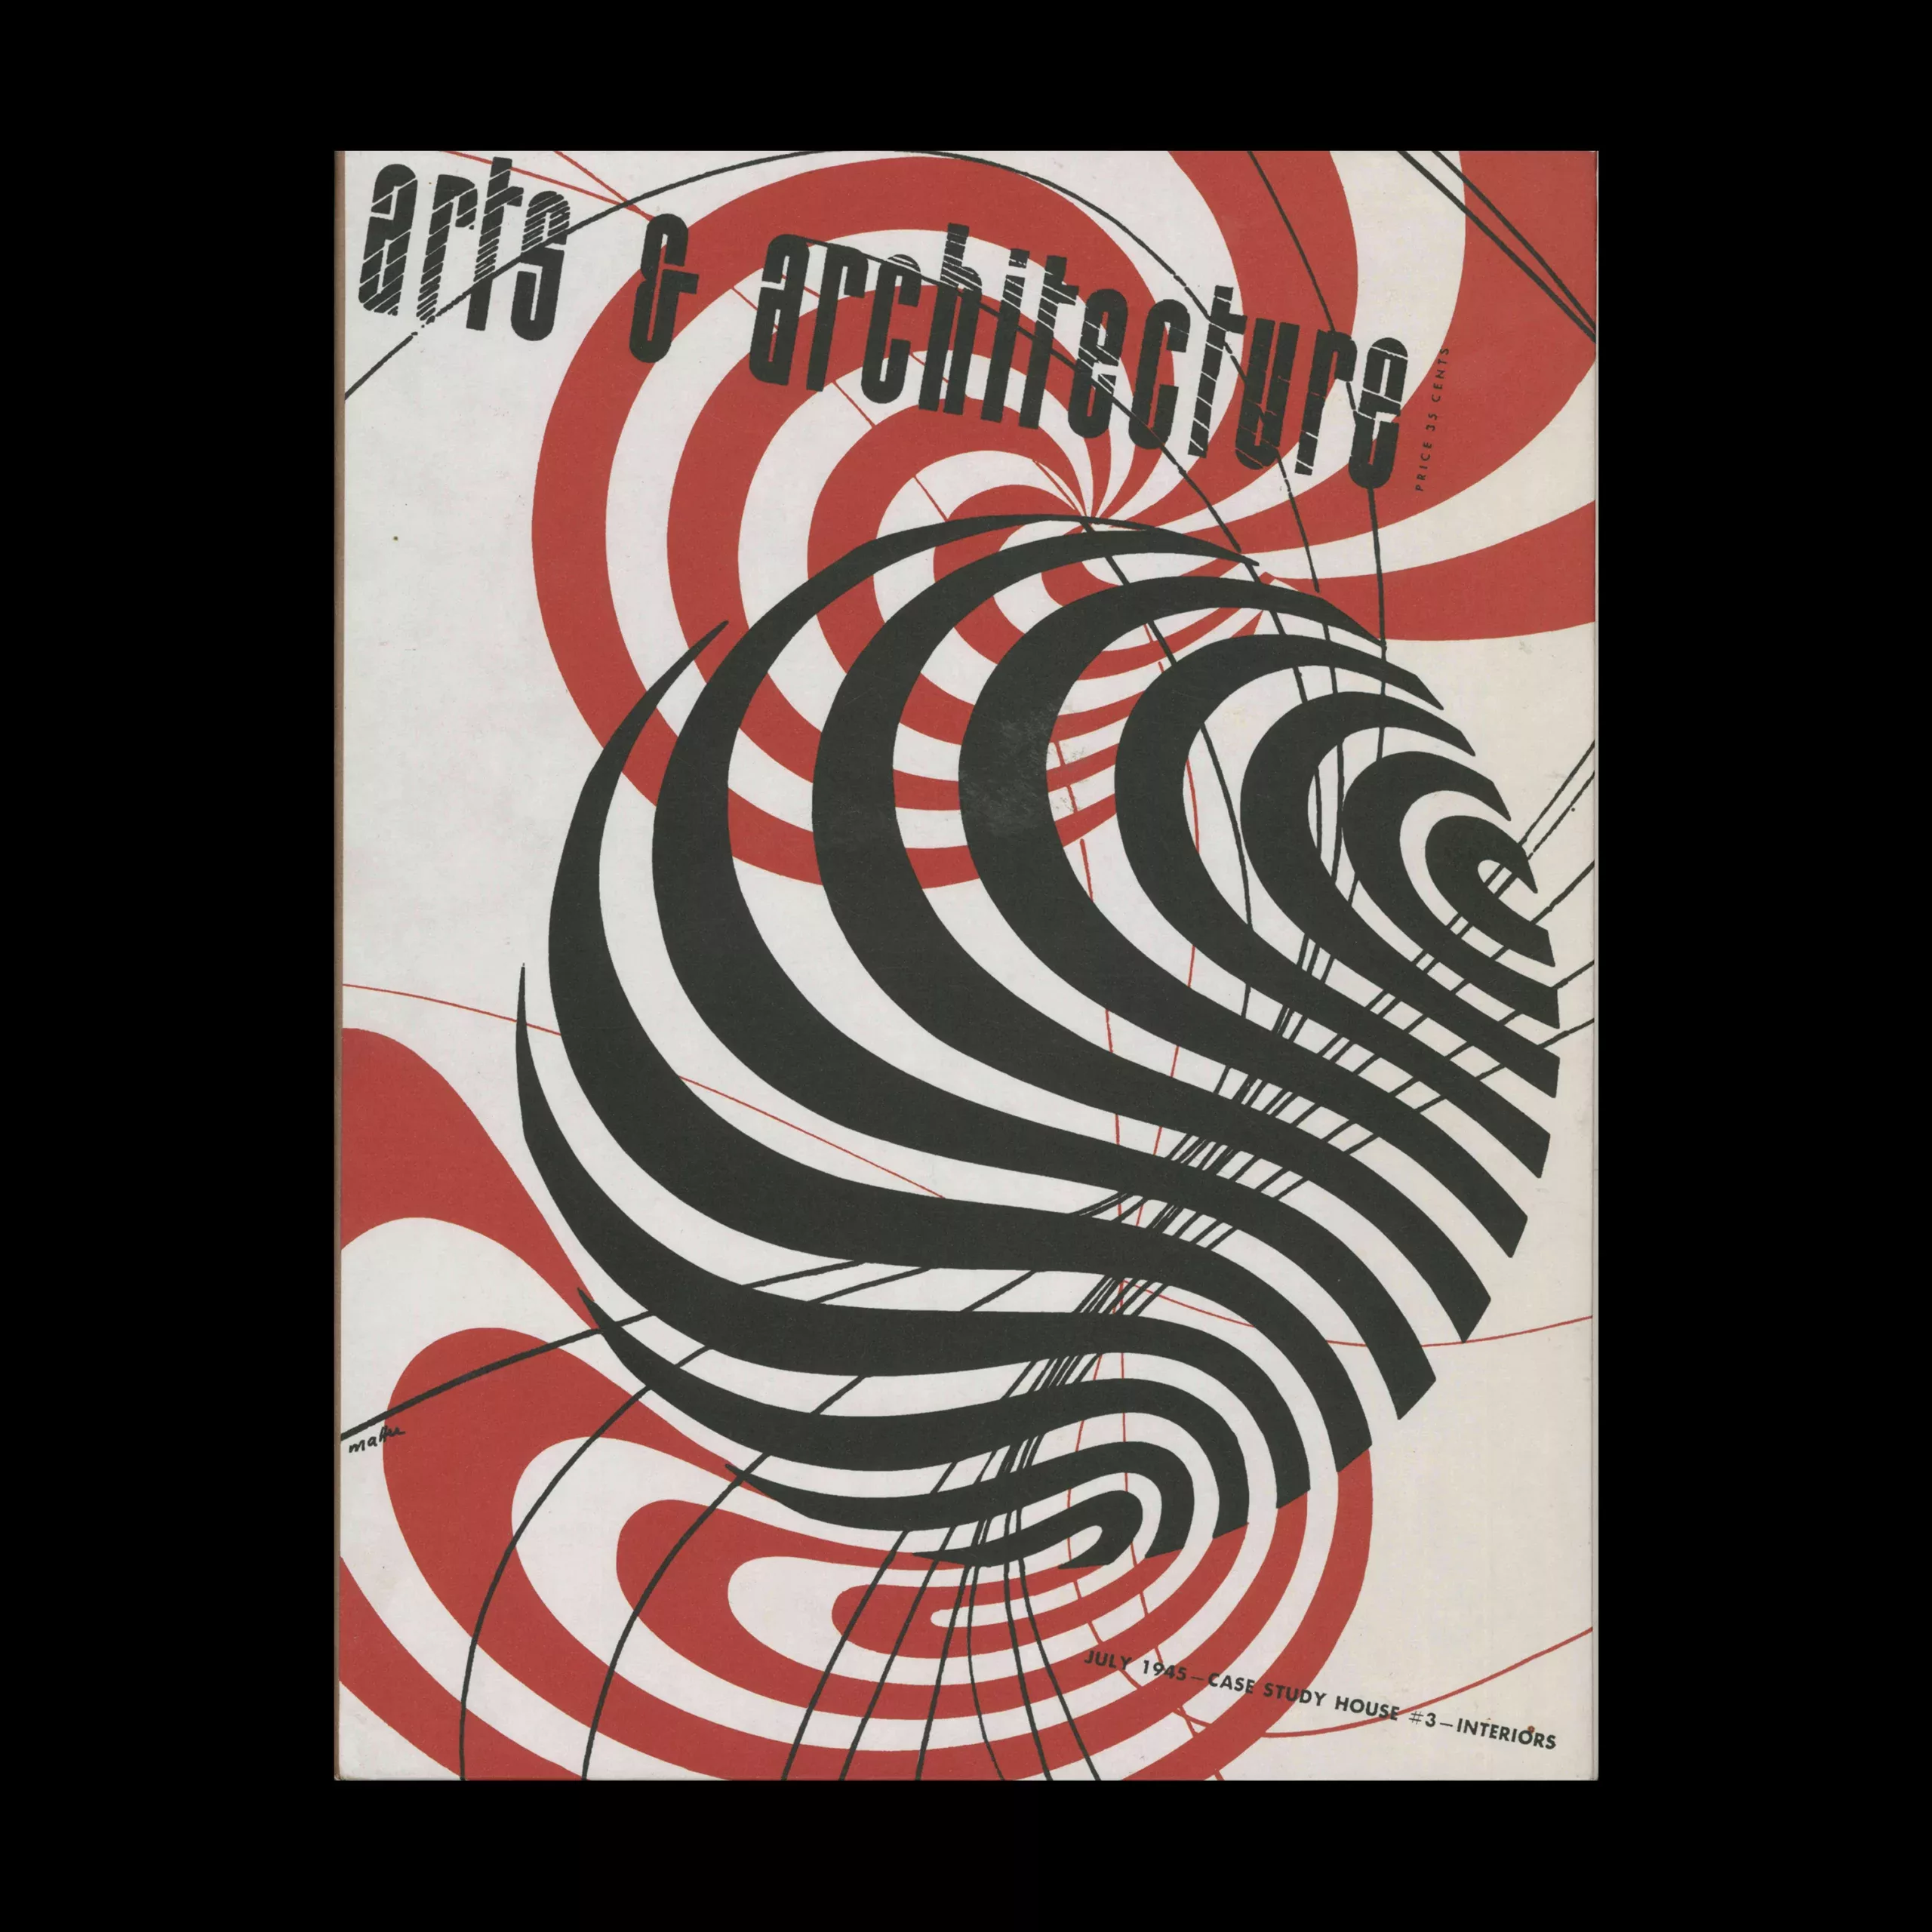 Arts & Architecture 1945, Complete Reprint, Taschen, 2008. Cover design by Herbert Matter